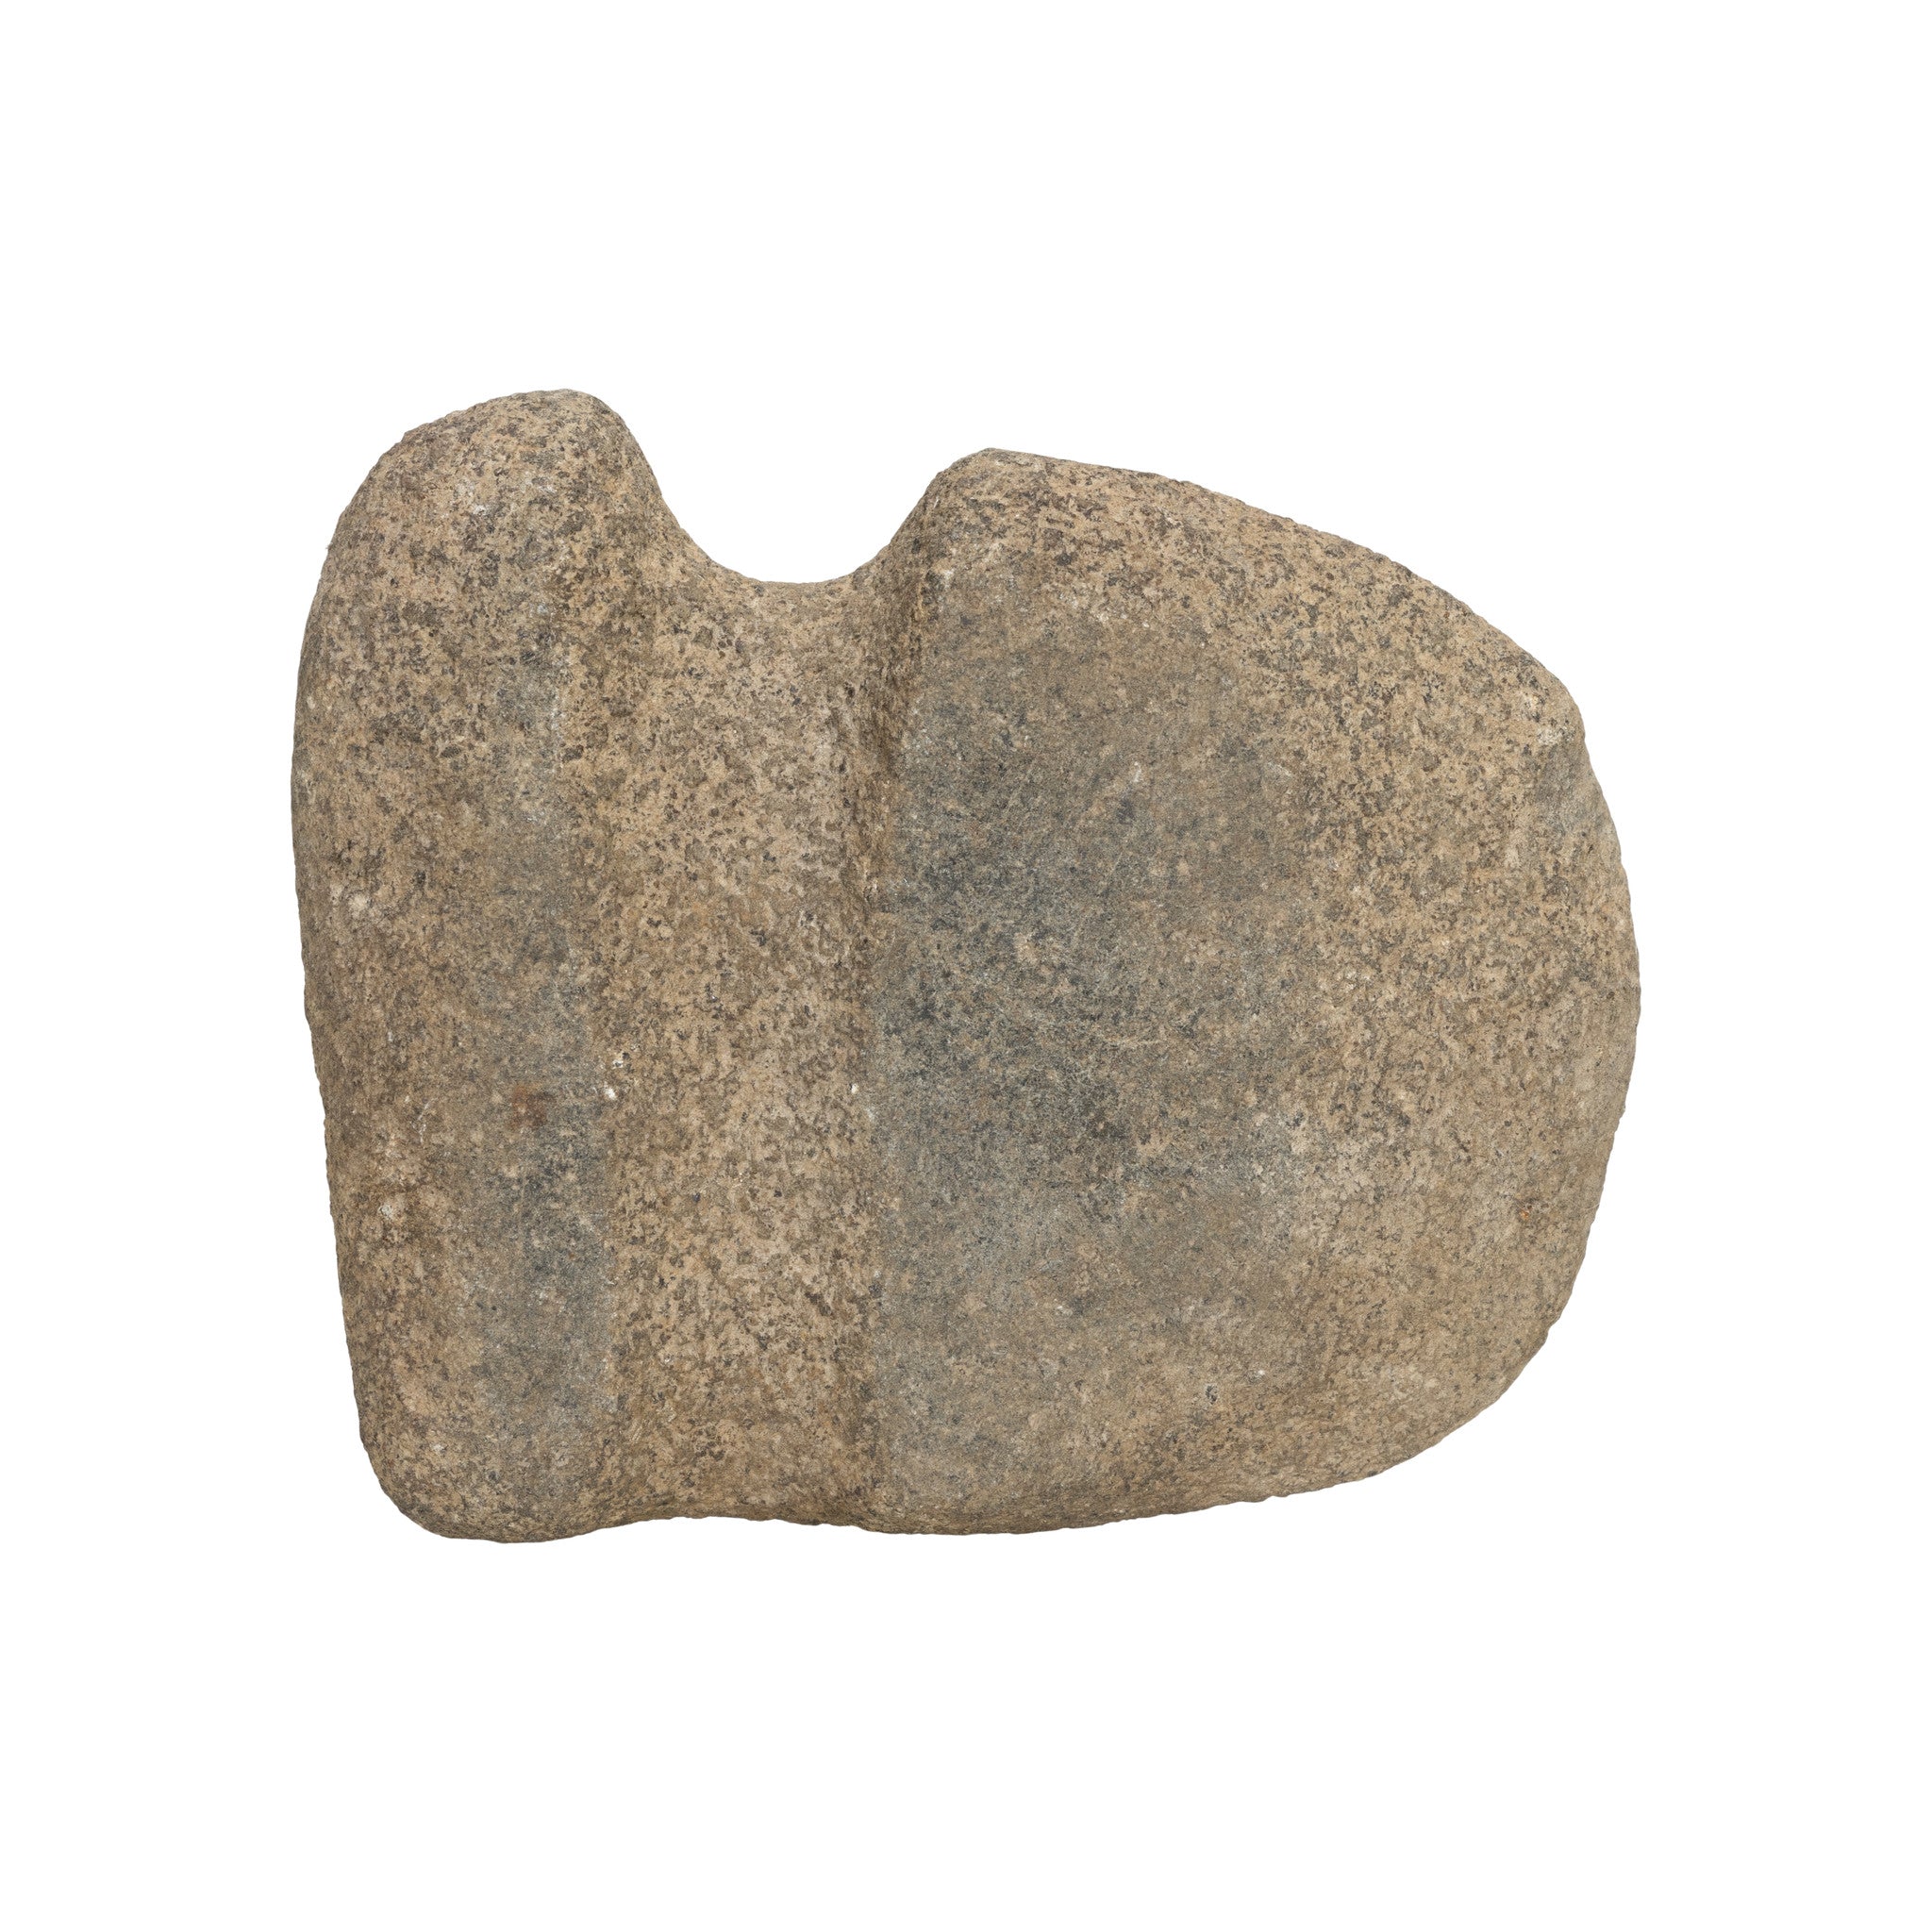 Prehistoric Granite Axe